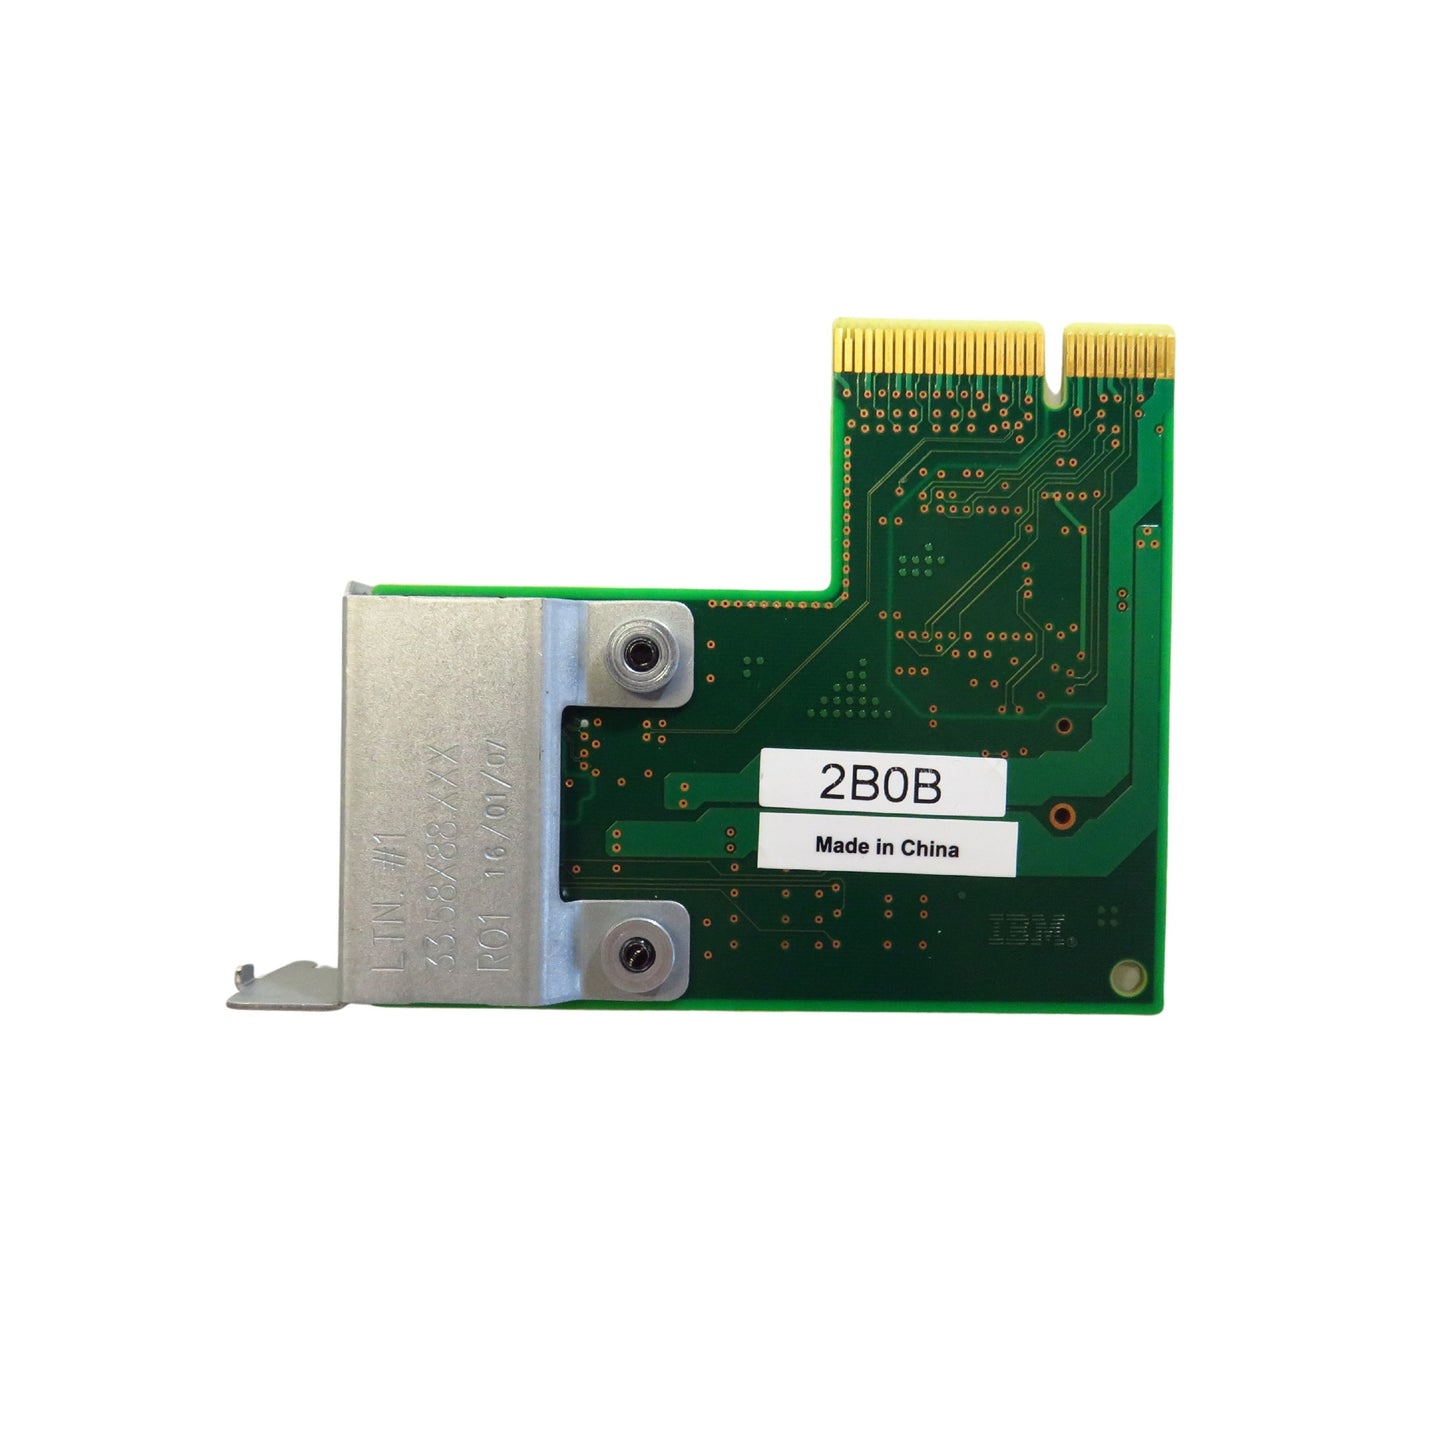 IBM 00E2164 2B0B Power8 System I/O Port Card (Refurbished)